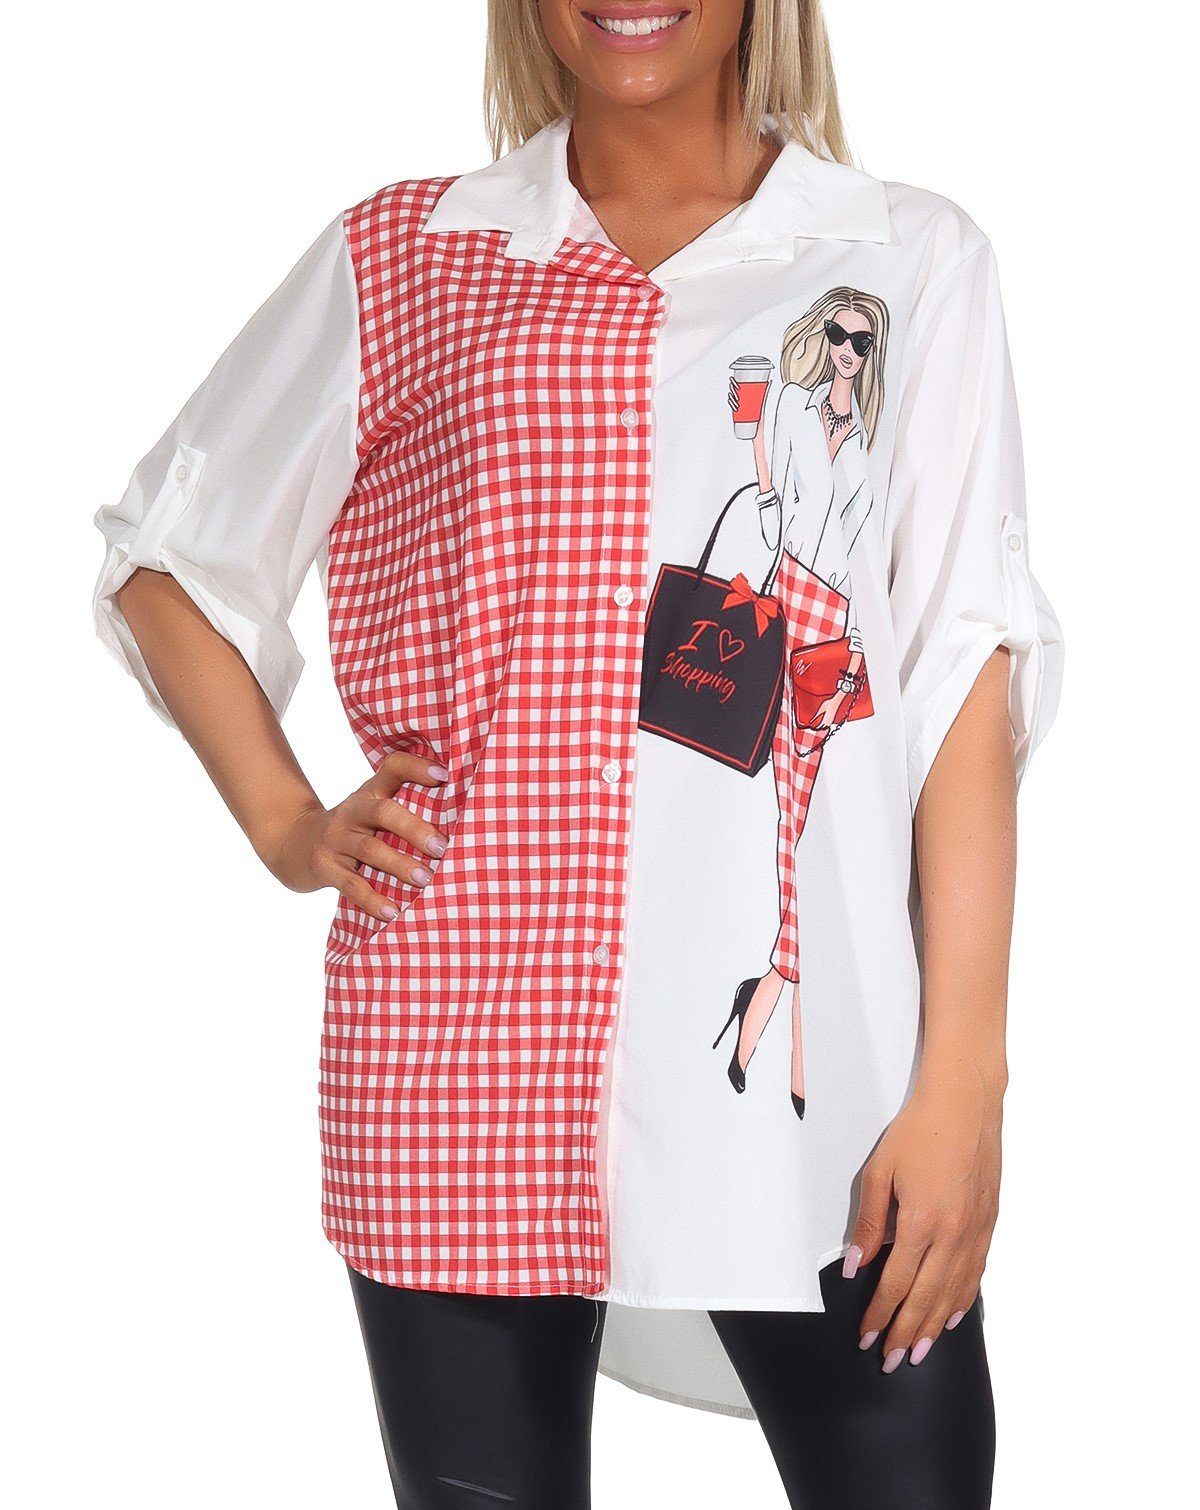 Mississhop Hemdbluse Damen Hemdbluse mit modernem Print Bluse Freizeit M. 376 Model 5